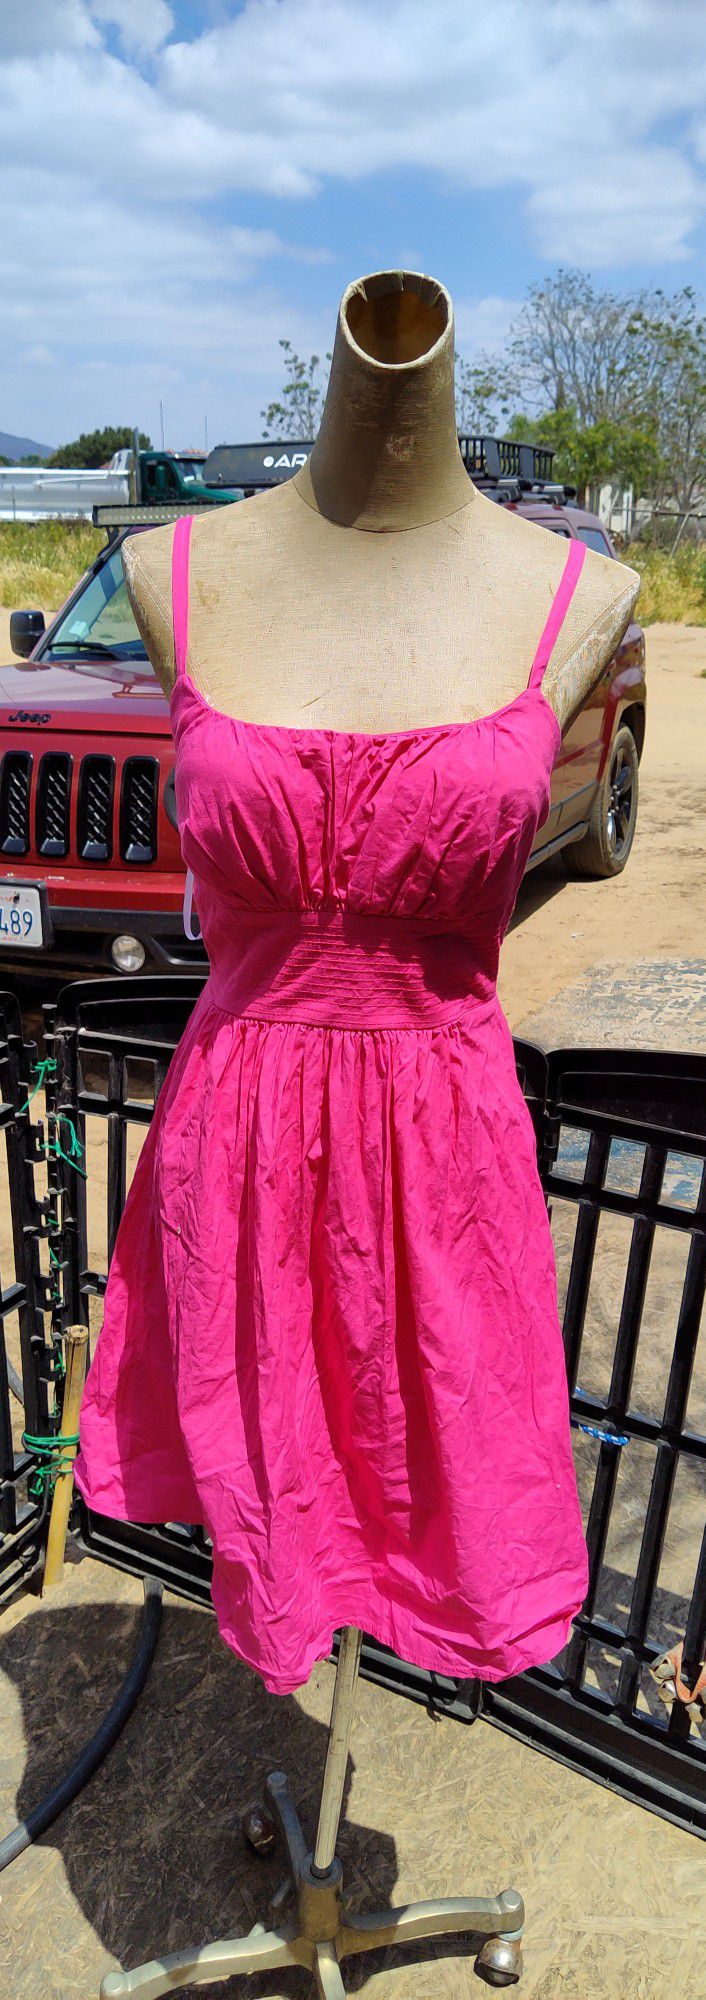 Bright And Fun Pink Sleeveless Dress